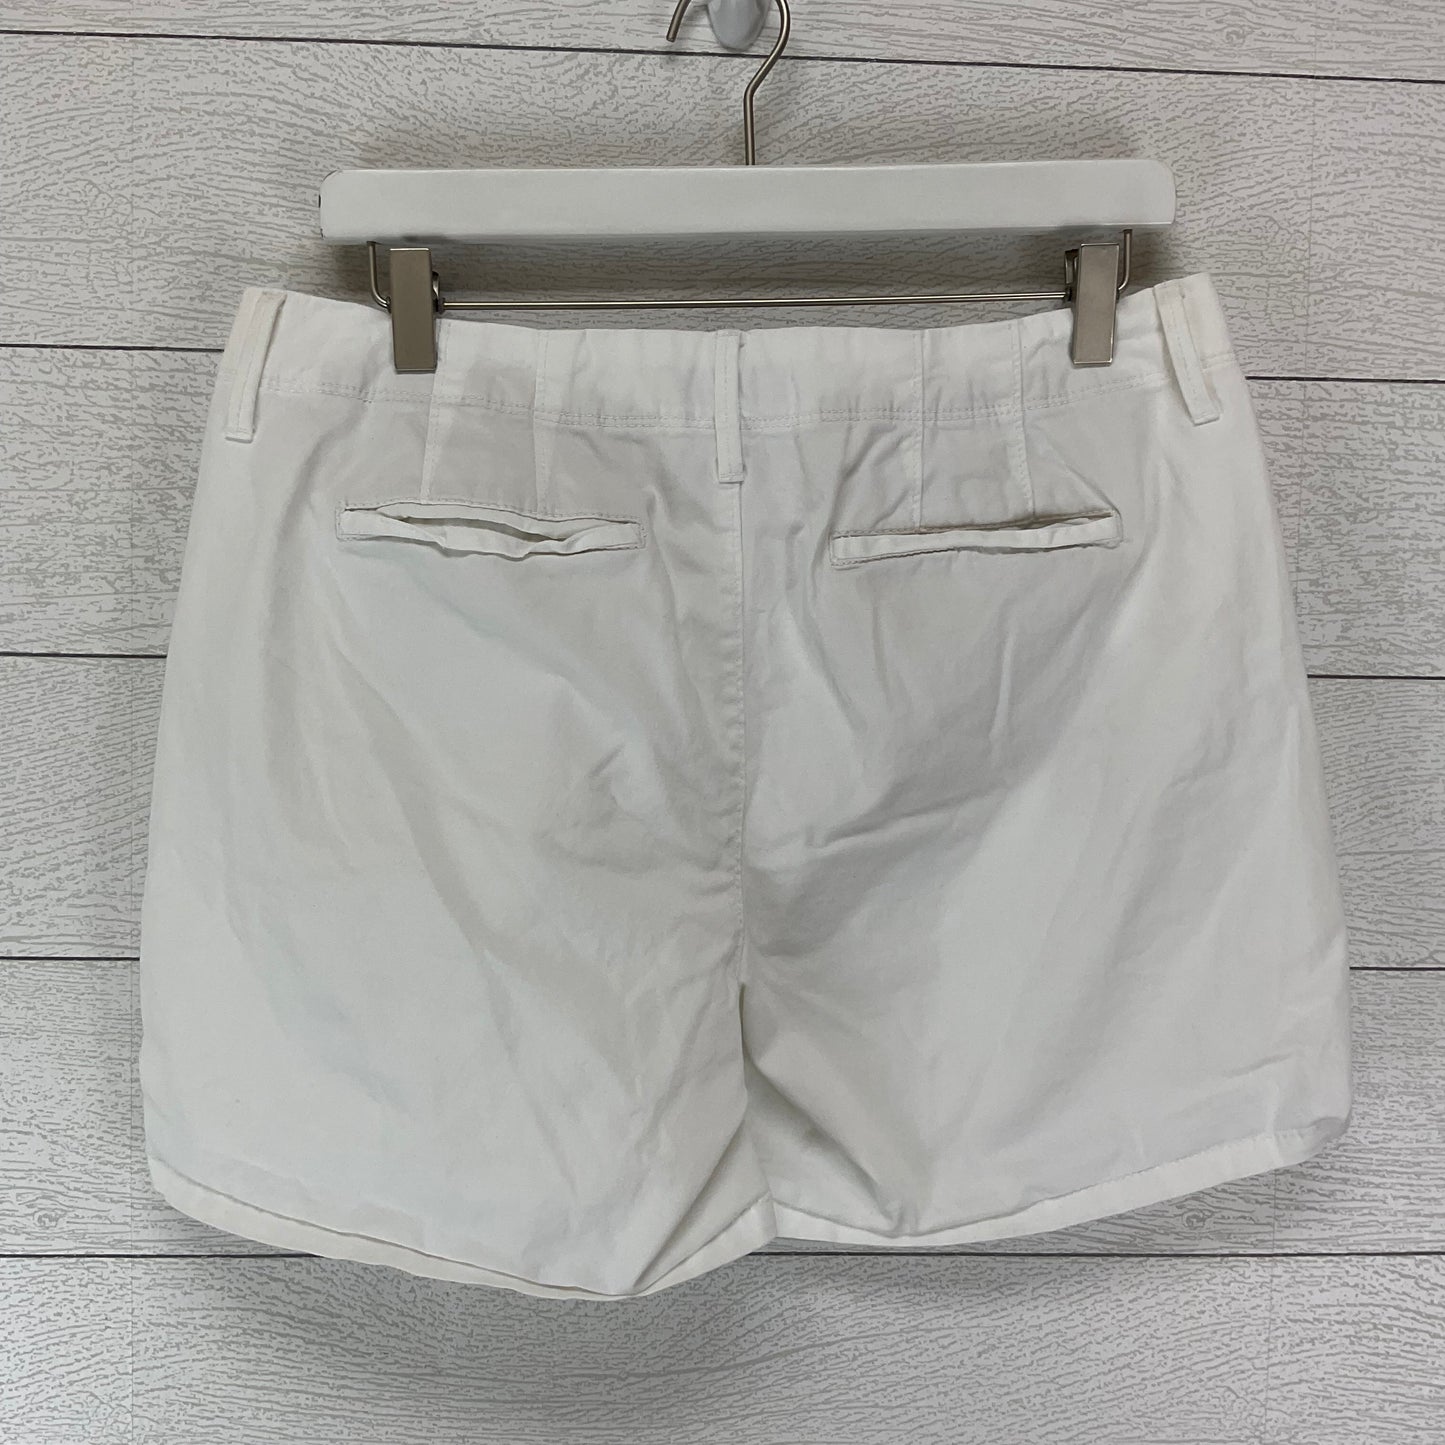 White Shorts Old Navy, Size 10